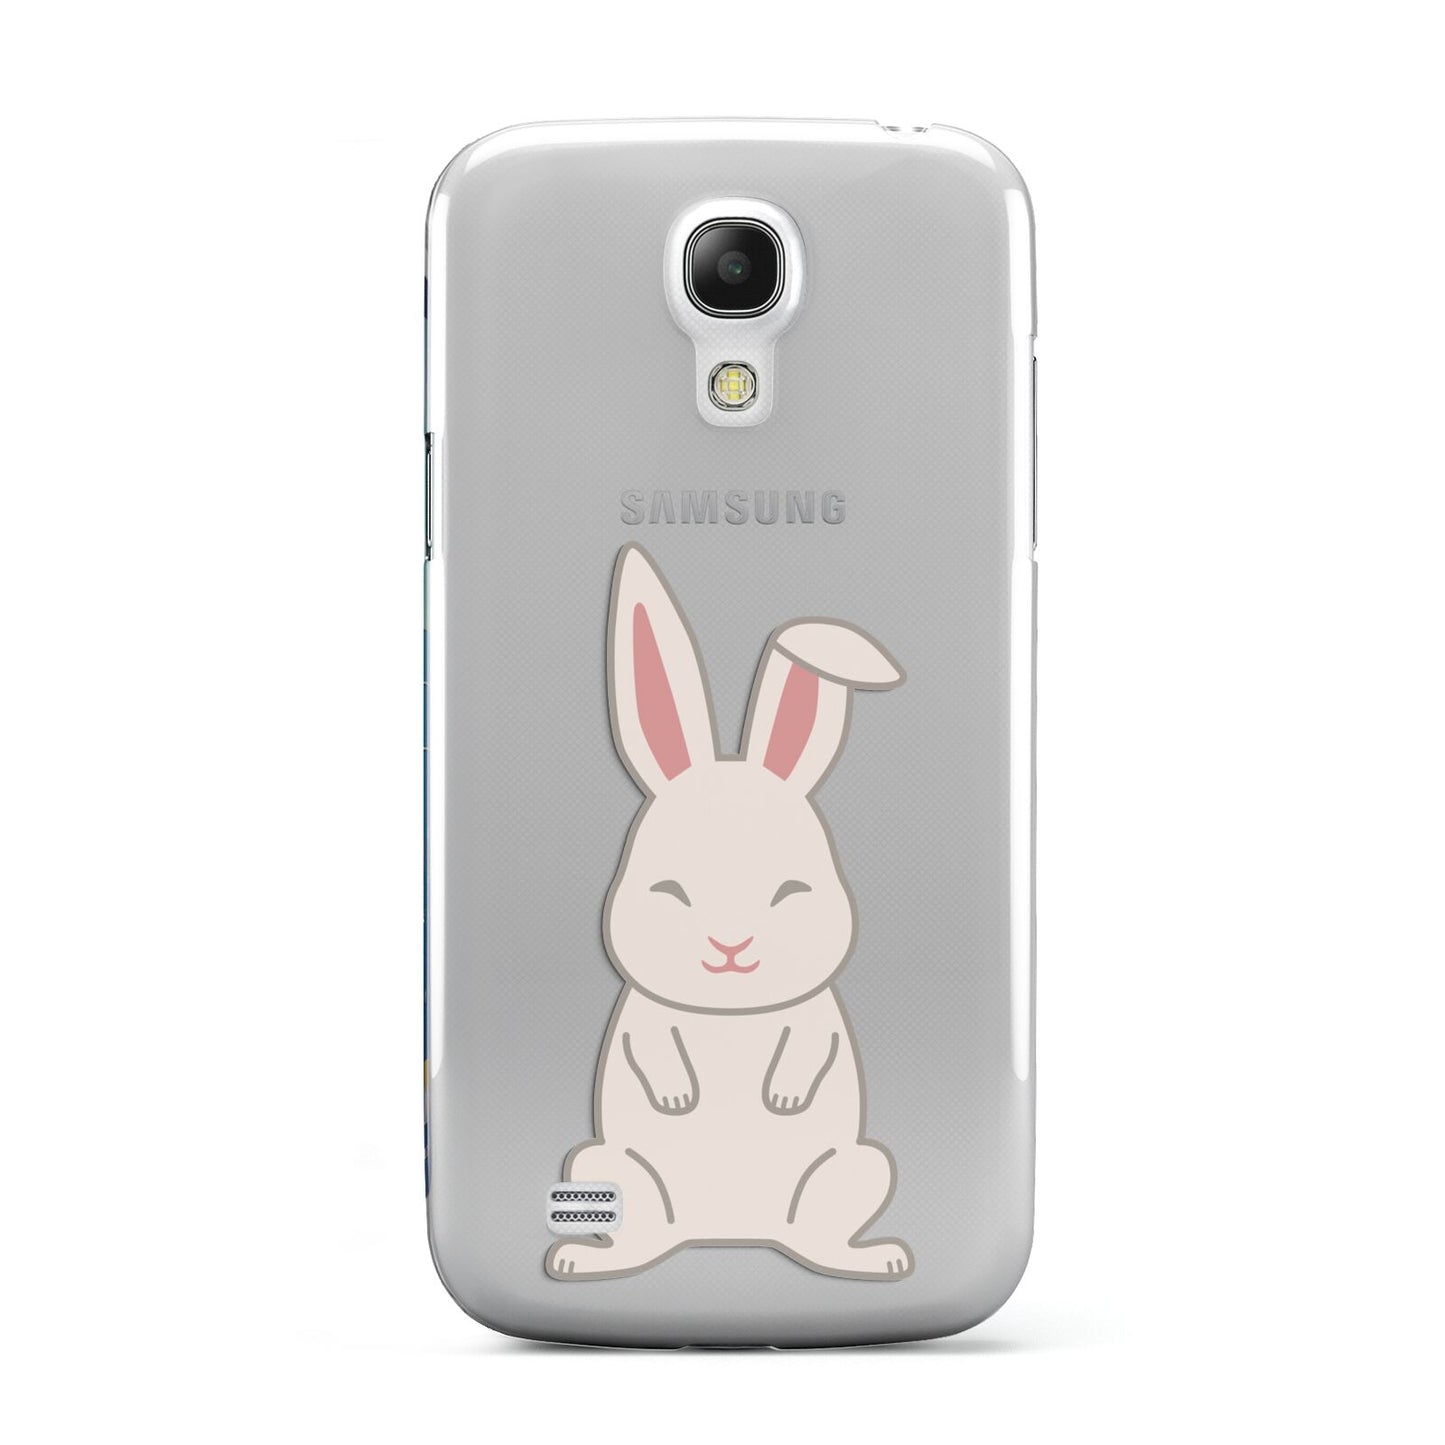 Bunny Samsung Galaxy S4 Mini Case